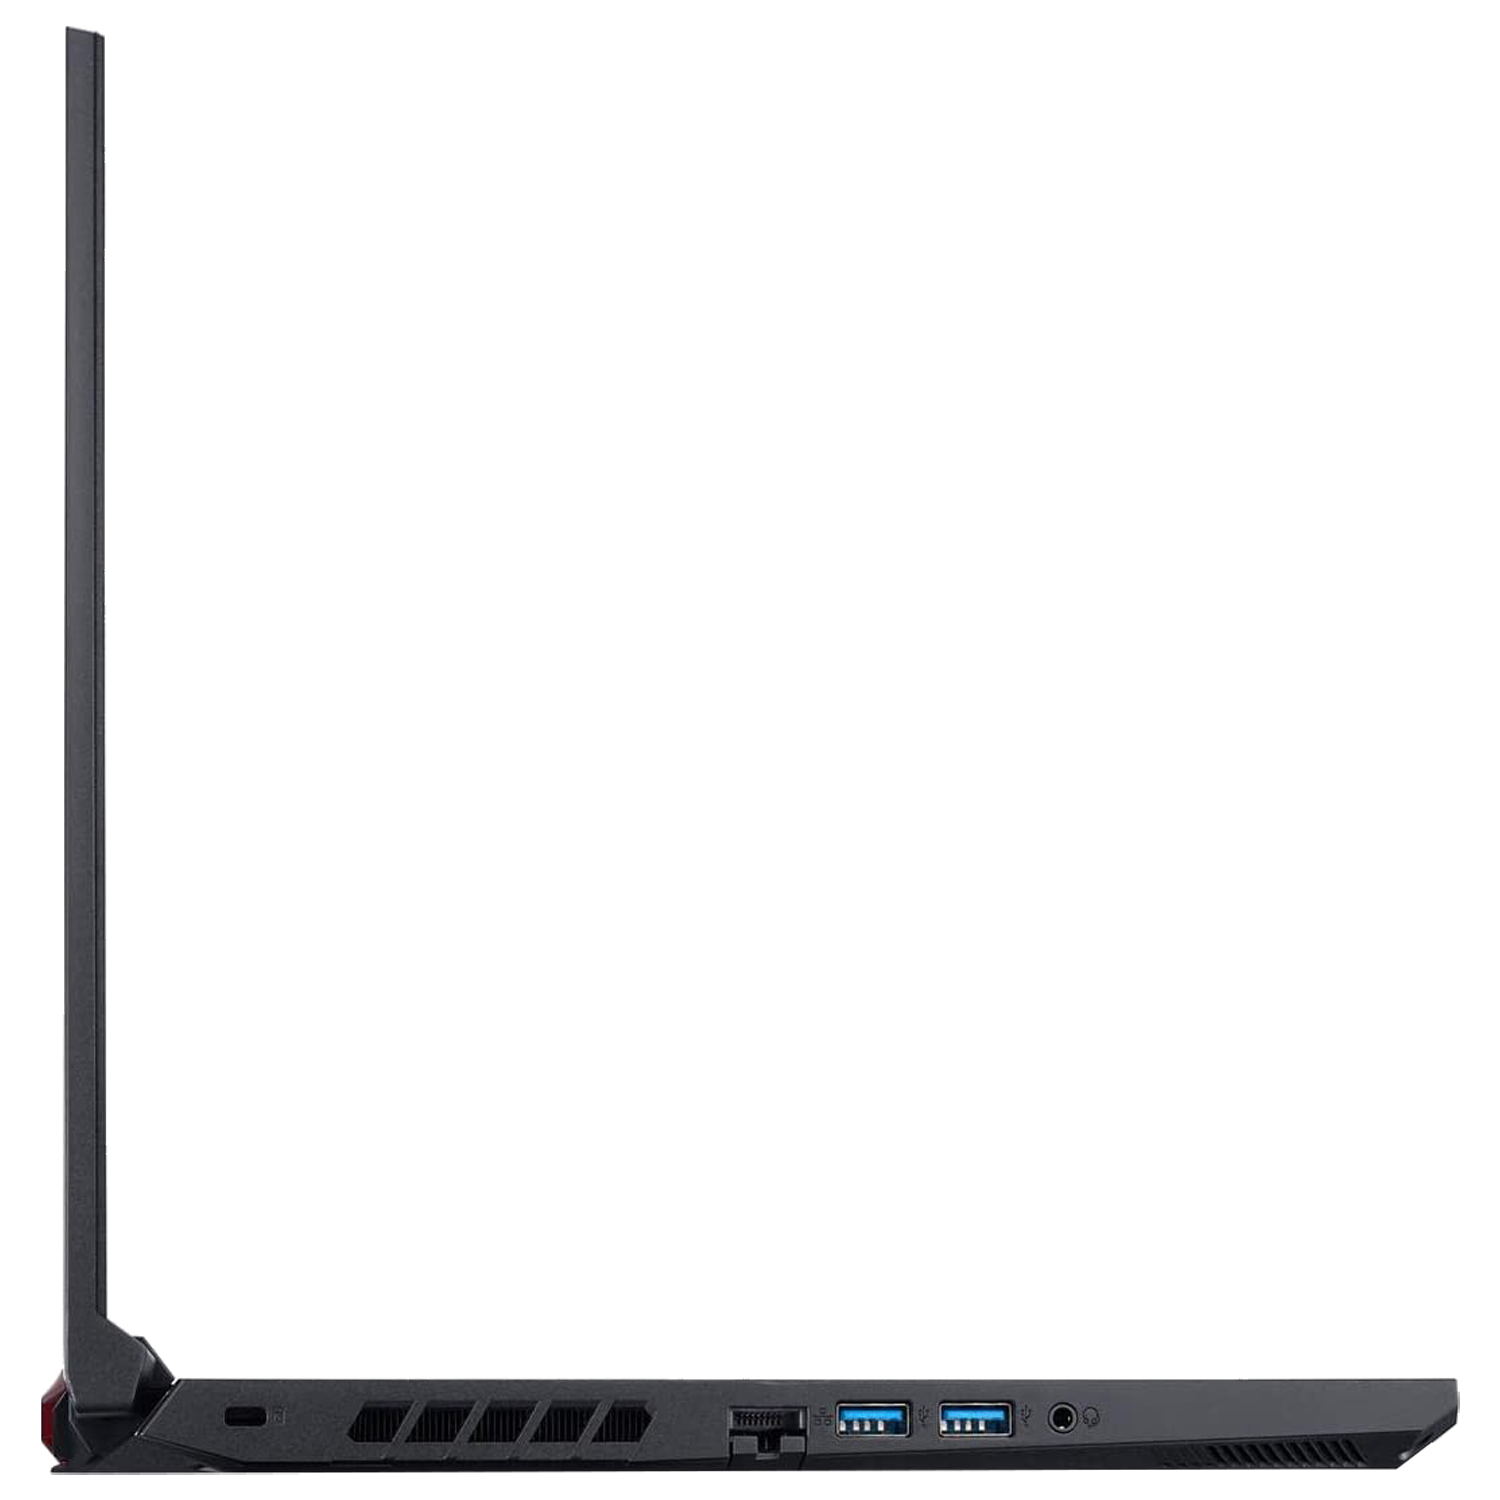 Notebook Gamer Acer AN515-57-59EY 15.6" Intel Core i5 11400 512GB SSD 8GB RAM NVIDIA GeForce GTX 1650 4GB - Preto